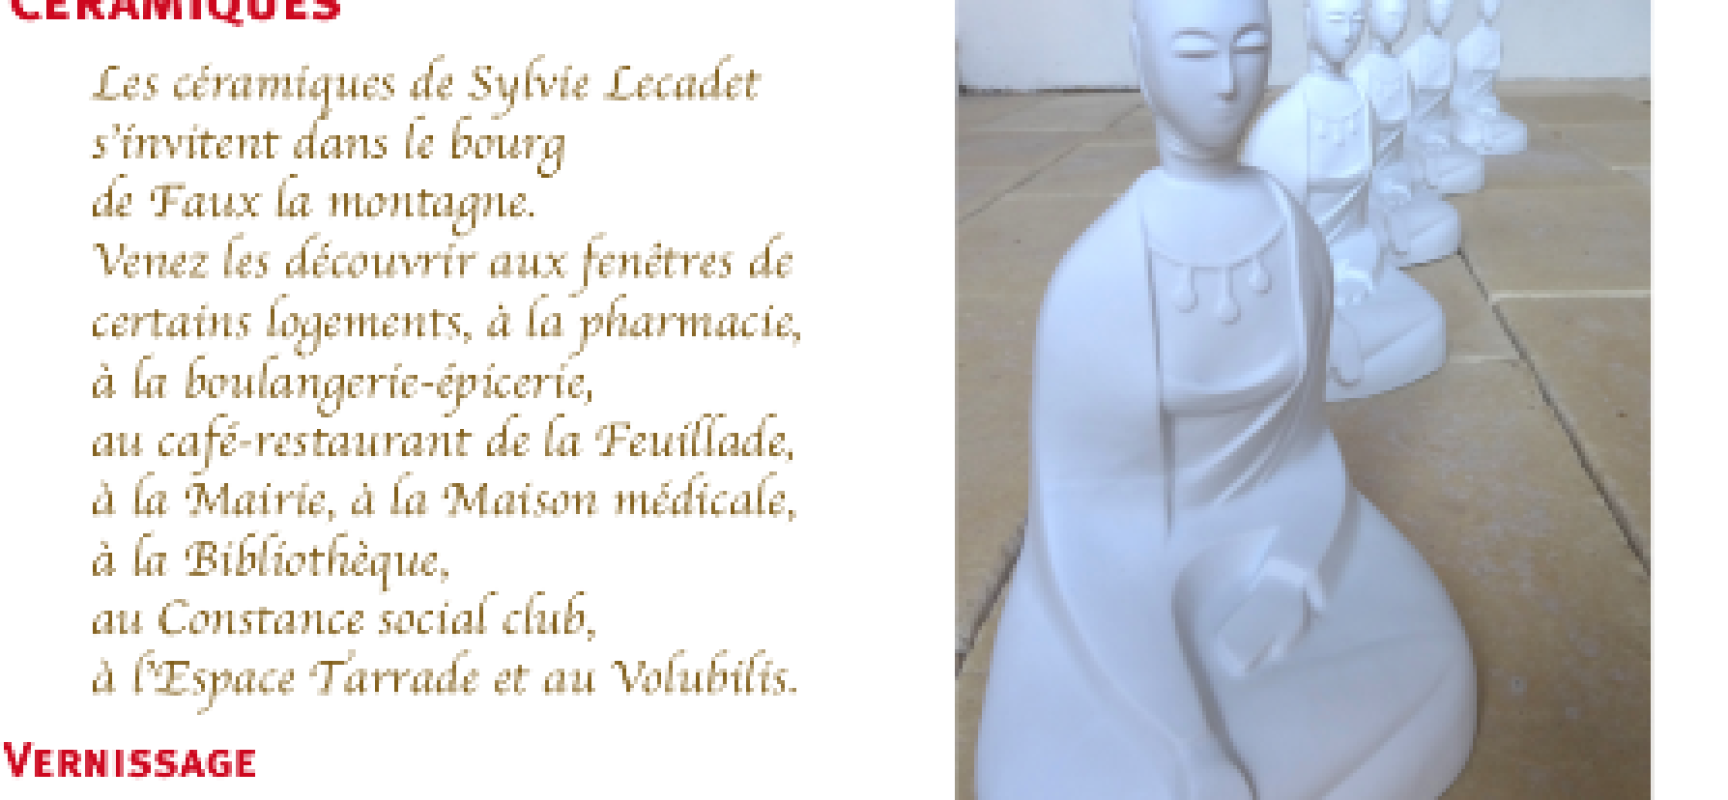 Sylvie Lecadet, exposition #FauxlaMontagne